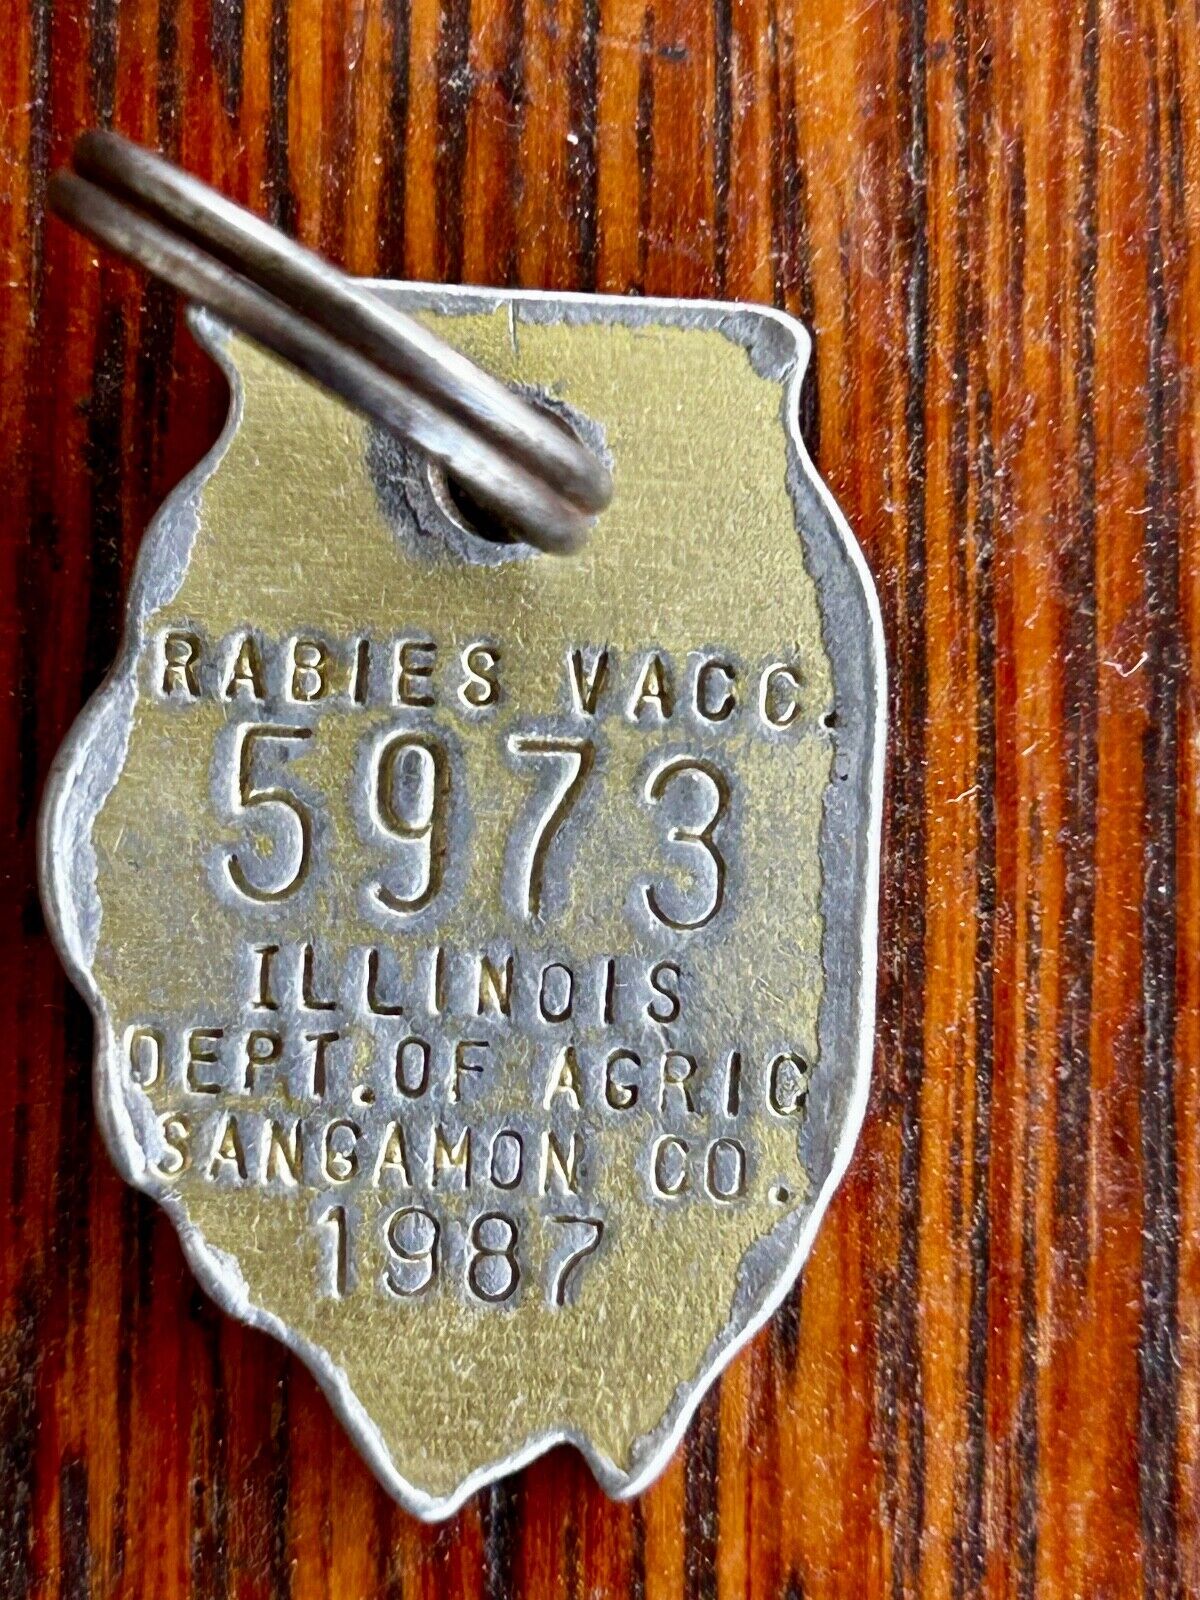 1987 Sangamon County Illinois Rabies Vaccine Dog Tag # 5973  dog tag